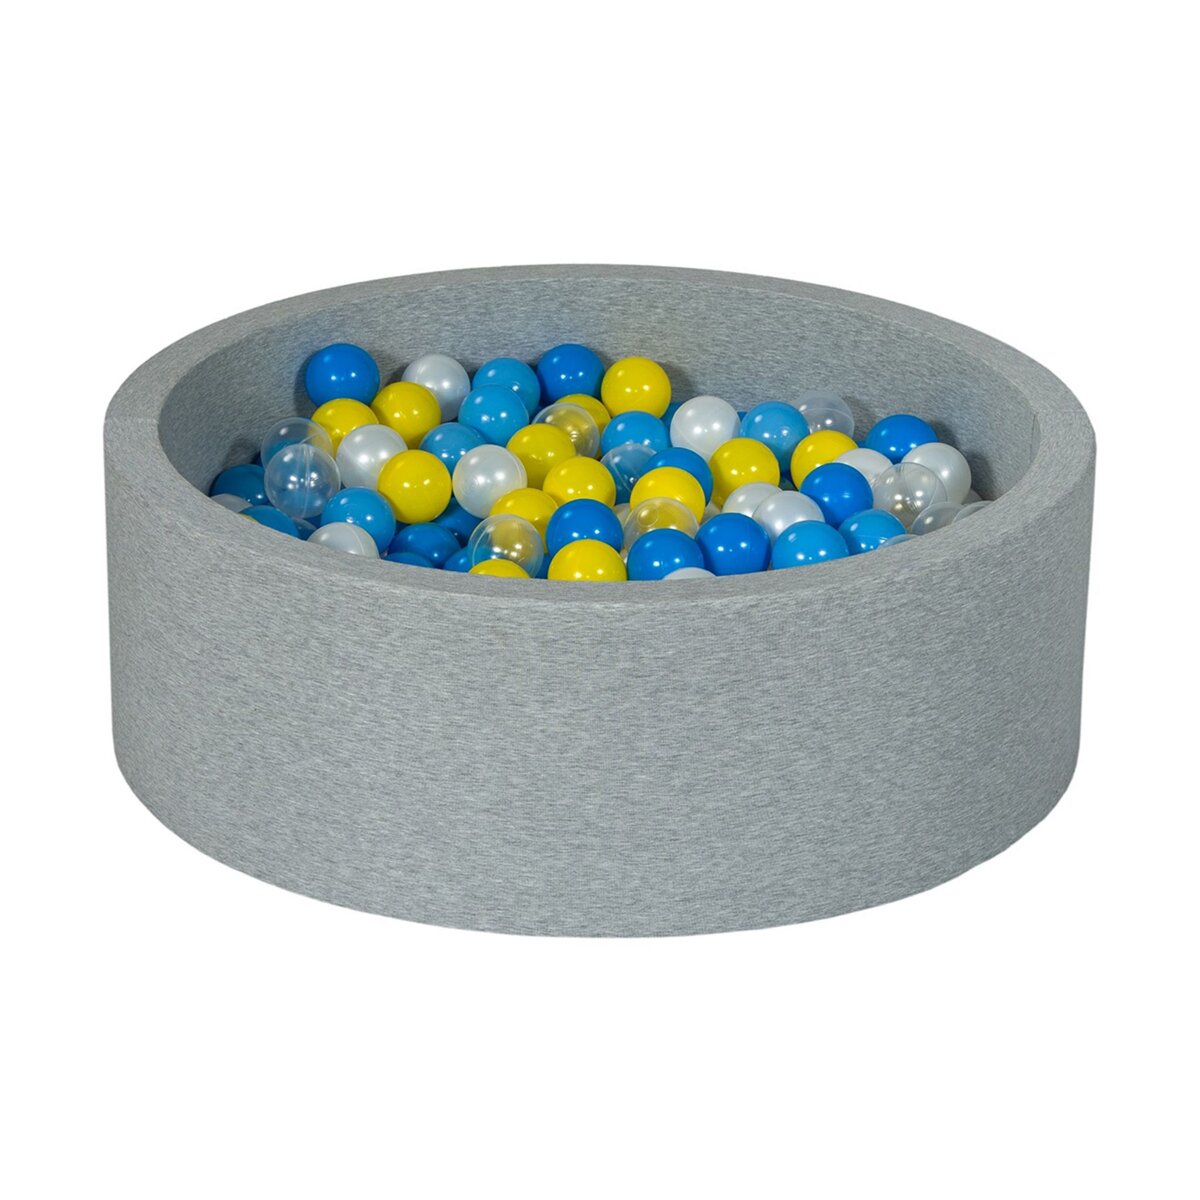  Piscine à balles Aire de jeu + 300 balles perle, transparent, jaune, bleu, bleu clair